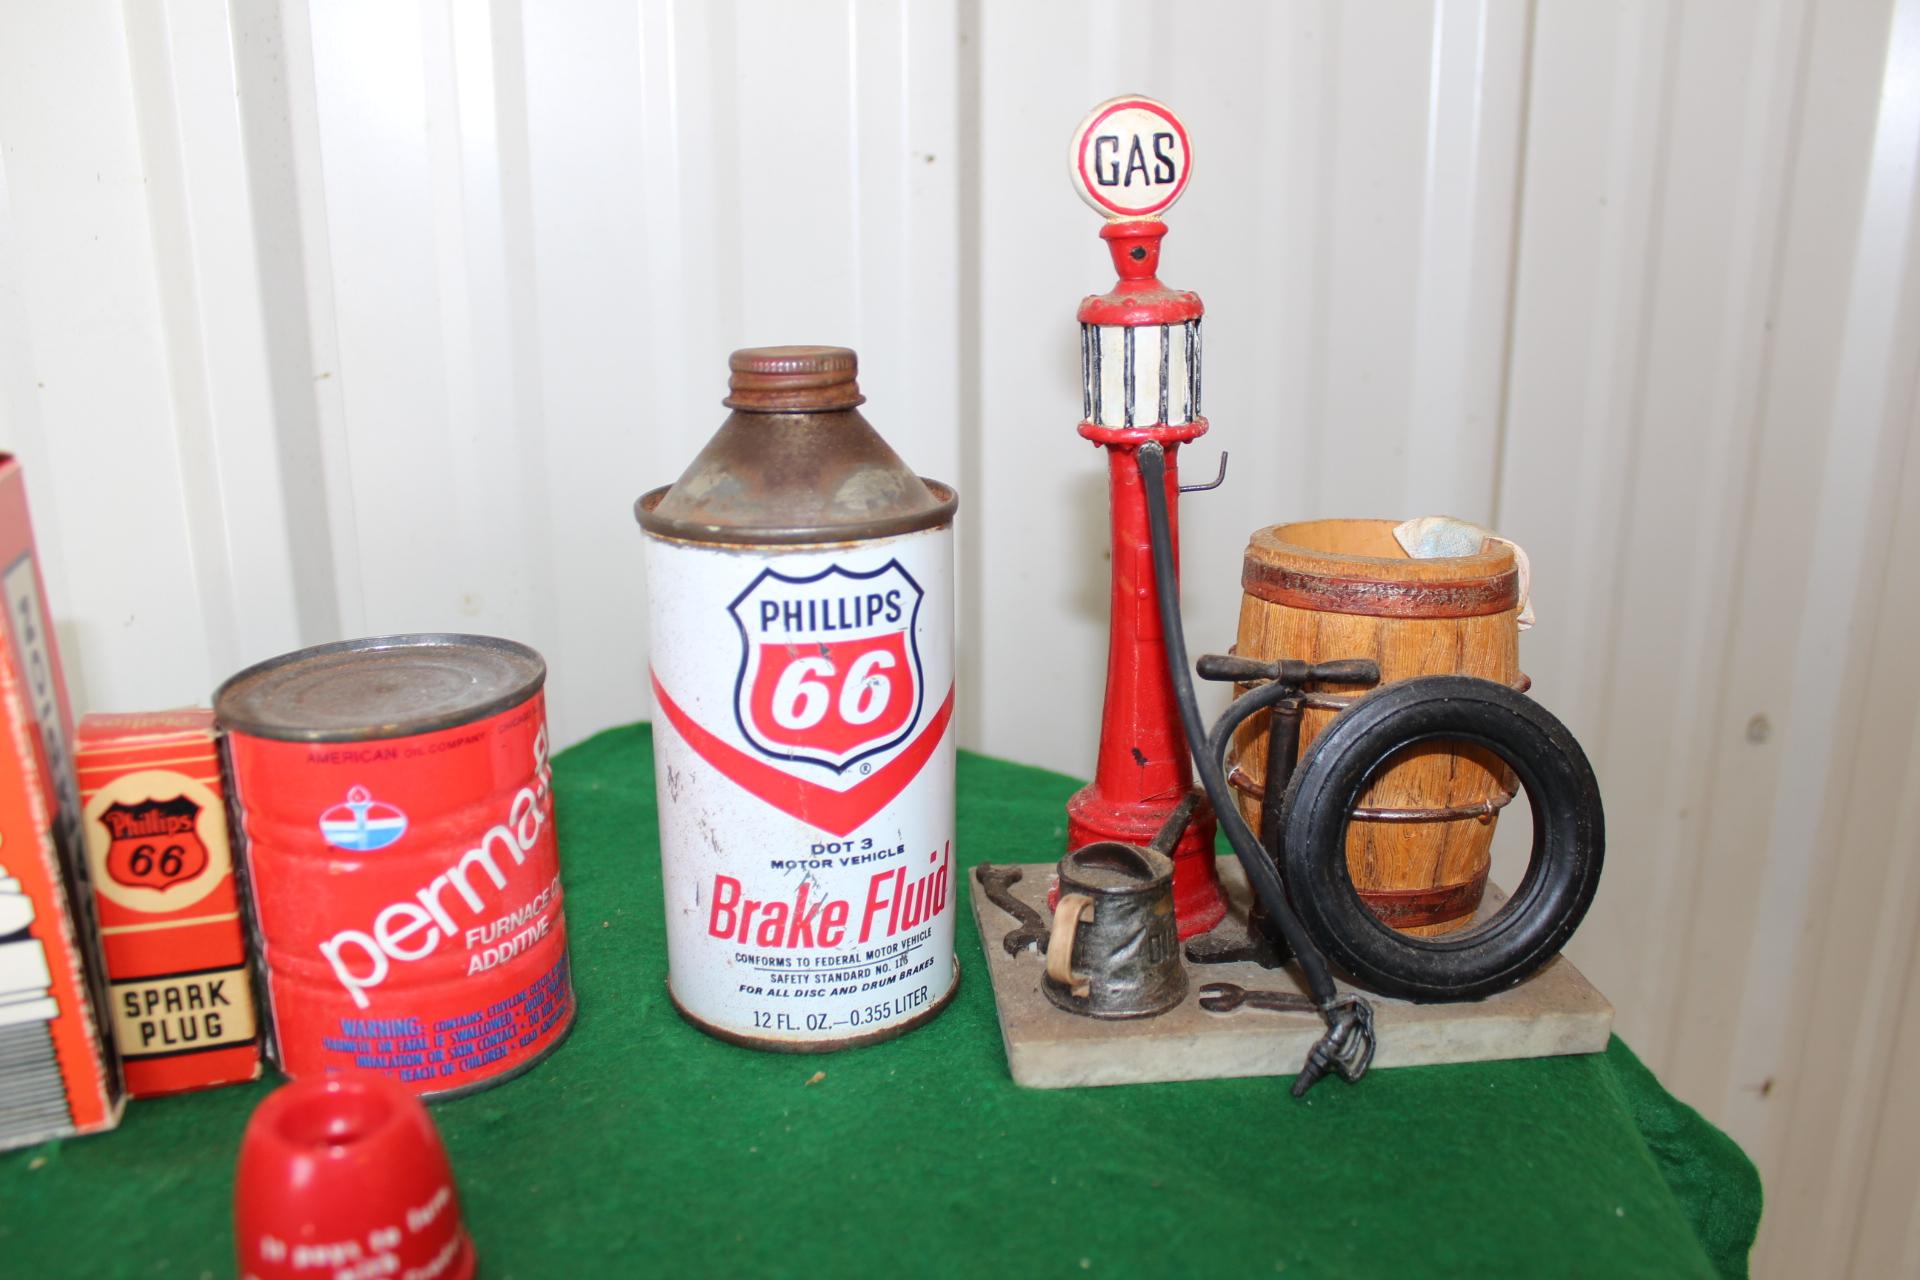 Gas and oil memorabilia, Phillips 66 spark plug, Texaco coin bank